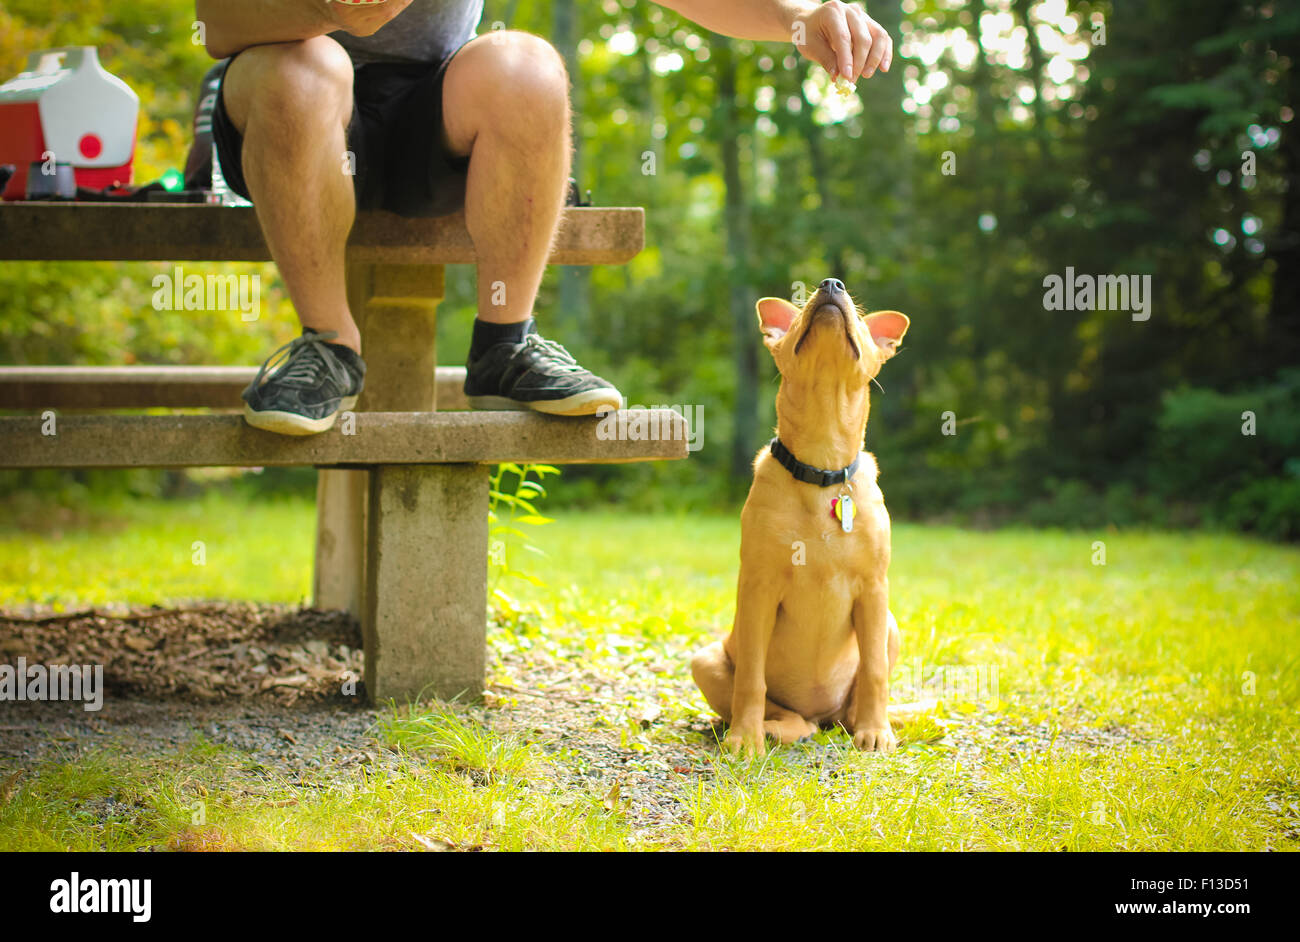 Man feeding his dog Stock Photo